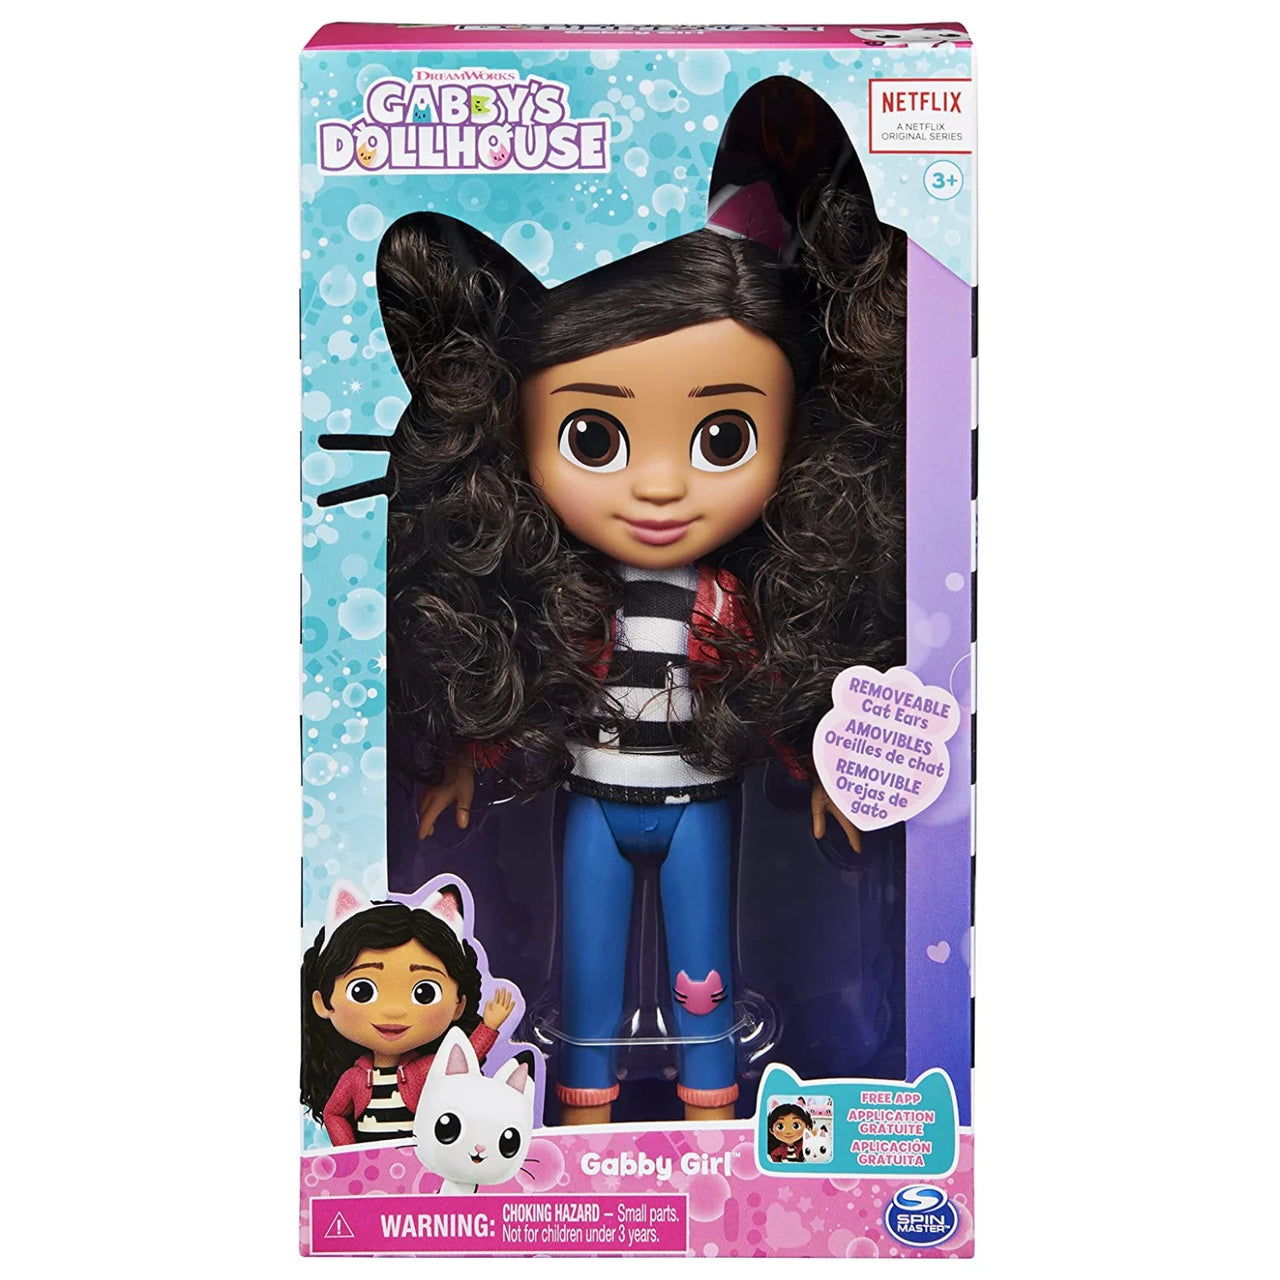 Gabby's Dollhouse 8-inch Gabby Girl Doll Master Kids Company Pretend Toys 